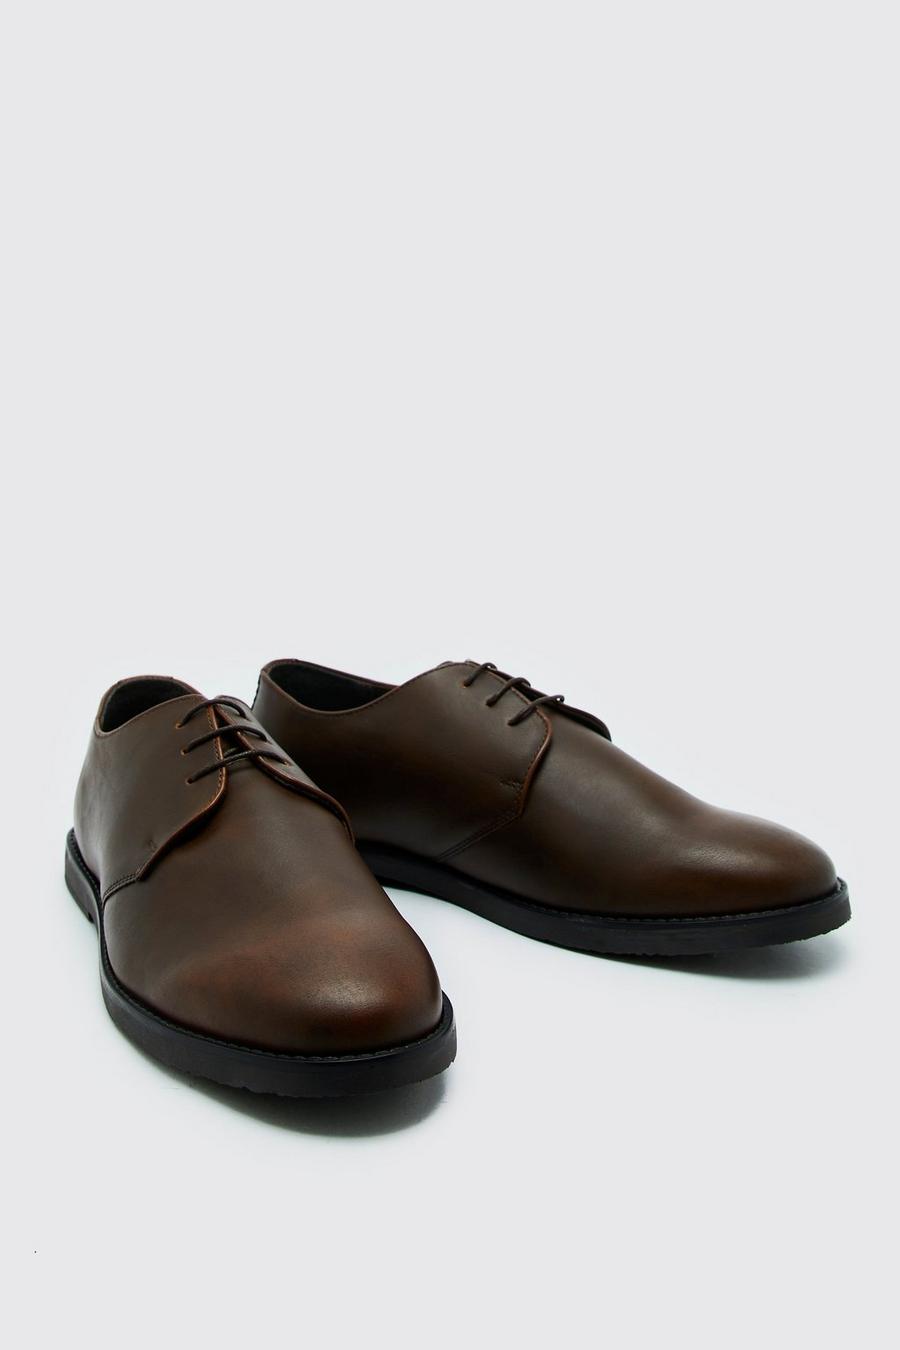 Chaussures style Derby en similicuir, Chocolate marron